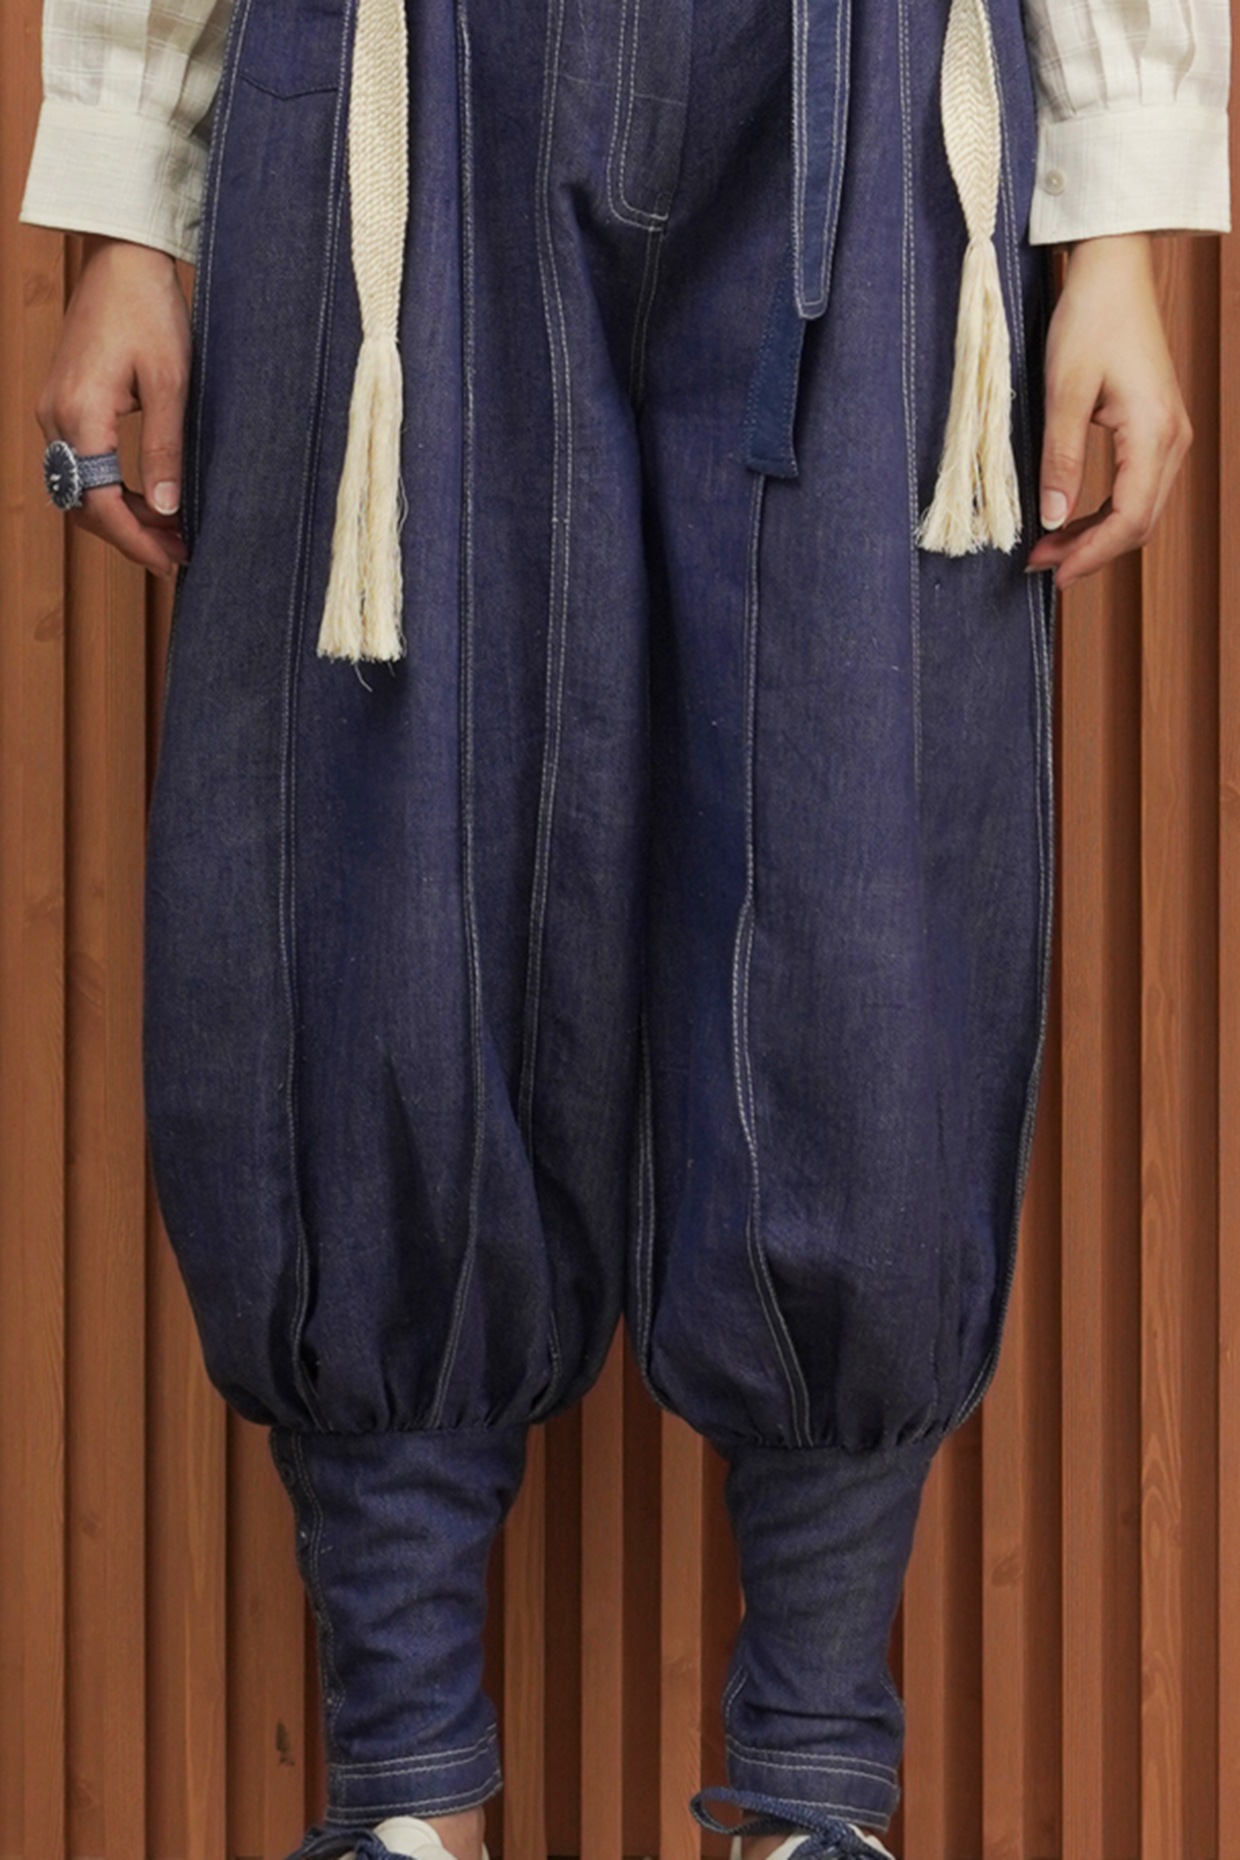 Khadi Cotton Mens Jeans - Buy Khadi Cotton Mens Jeans Online Starting at  Just ₹270 | Meesho